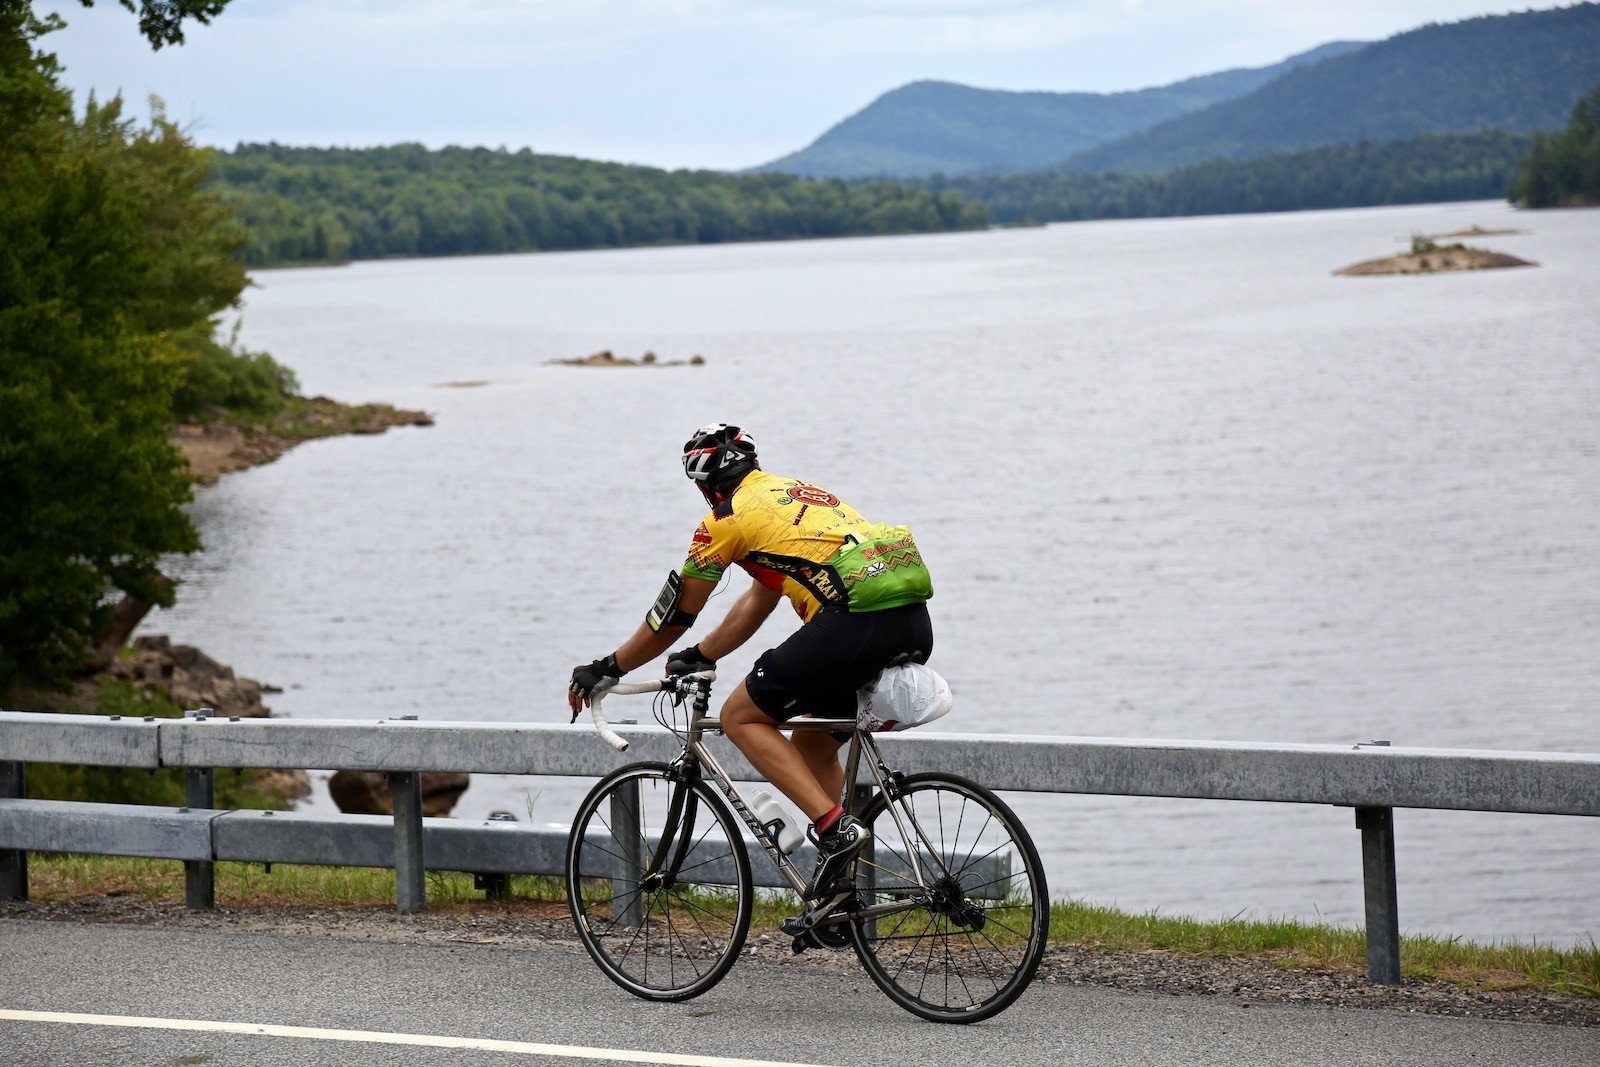 The ididaride! A 75-mile Bike Tour of the Adirondack Park